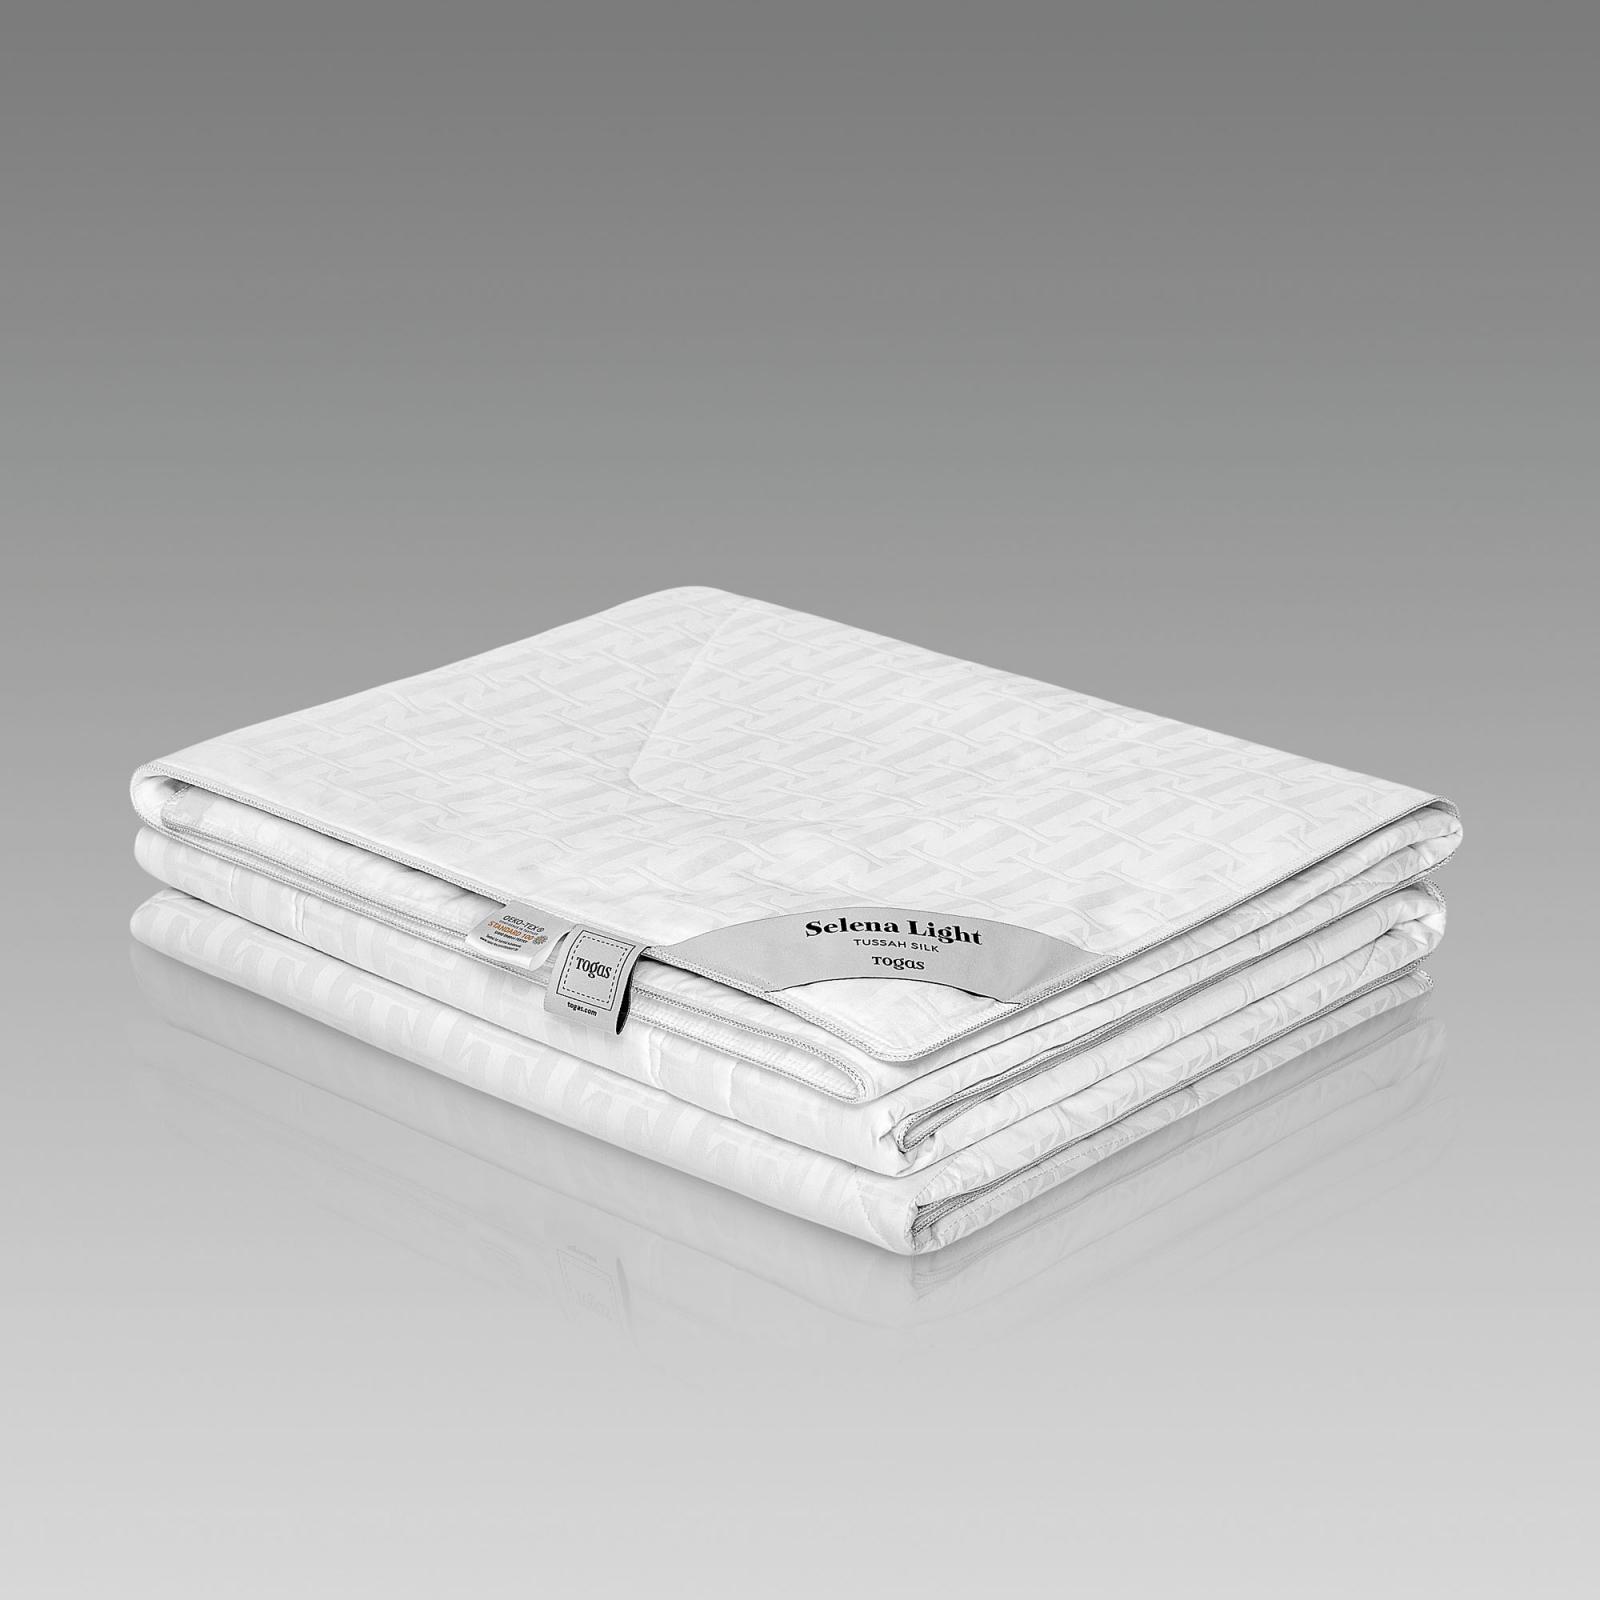 Одеяло Togas селена лайт 200х210 см (20.04.16.0108), размер 200х210 см - фото 1